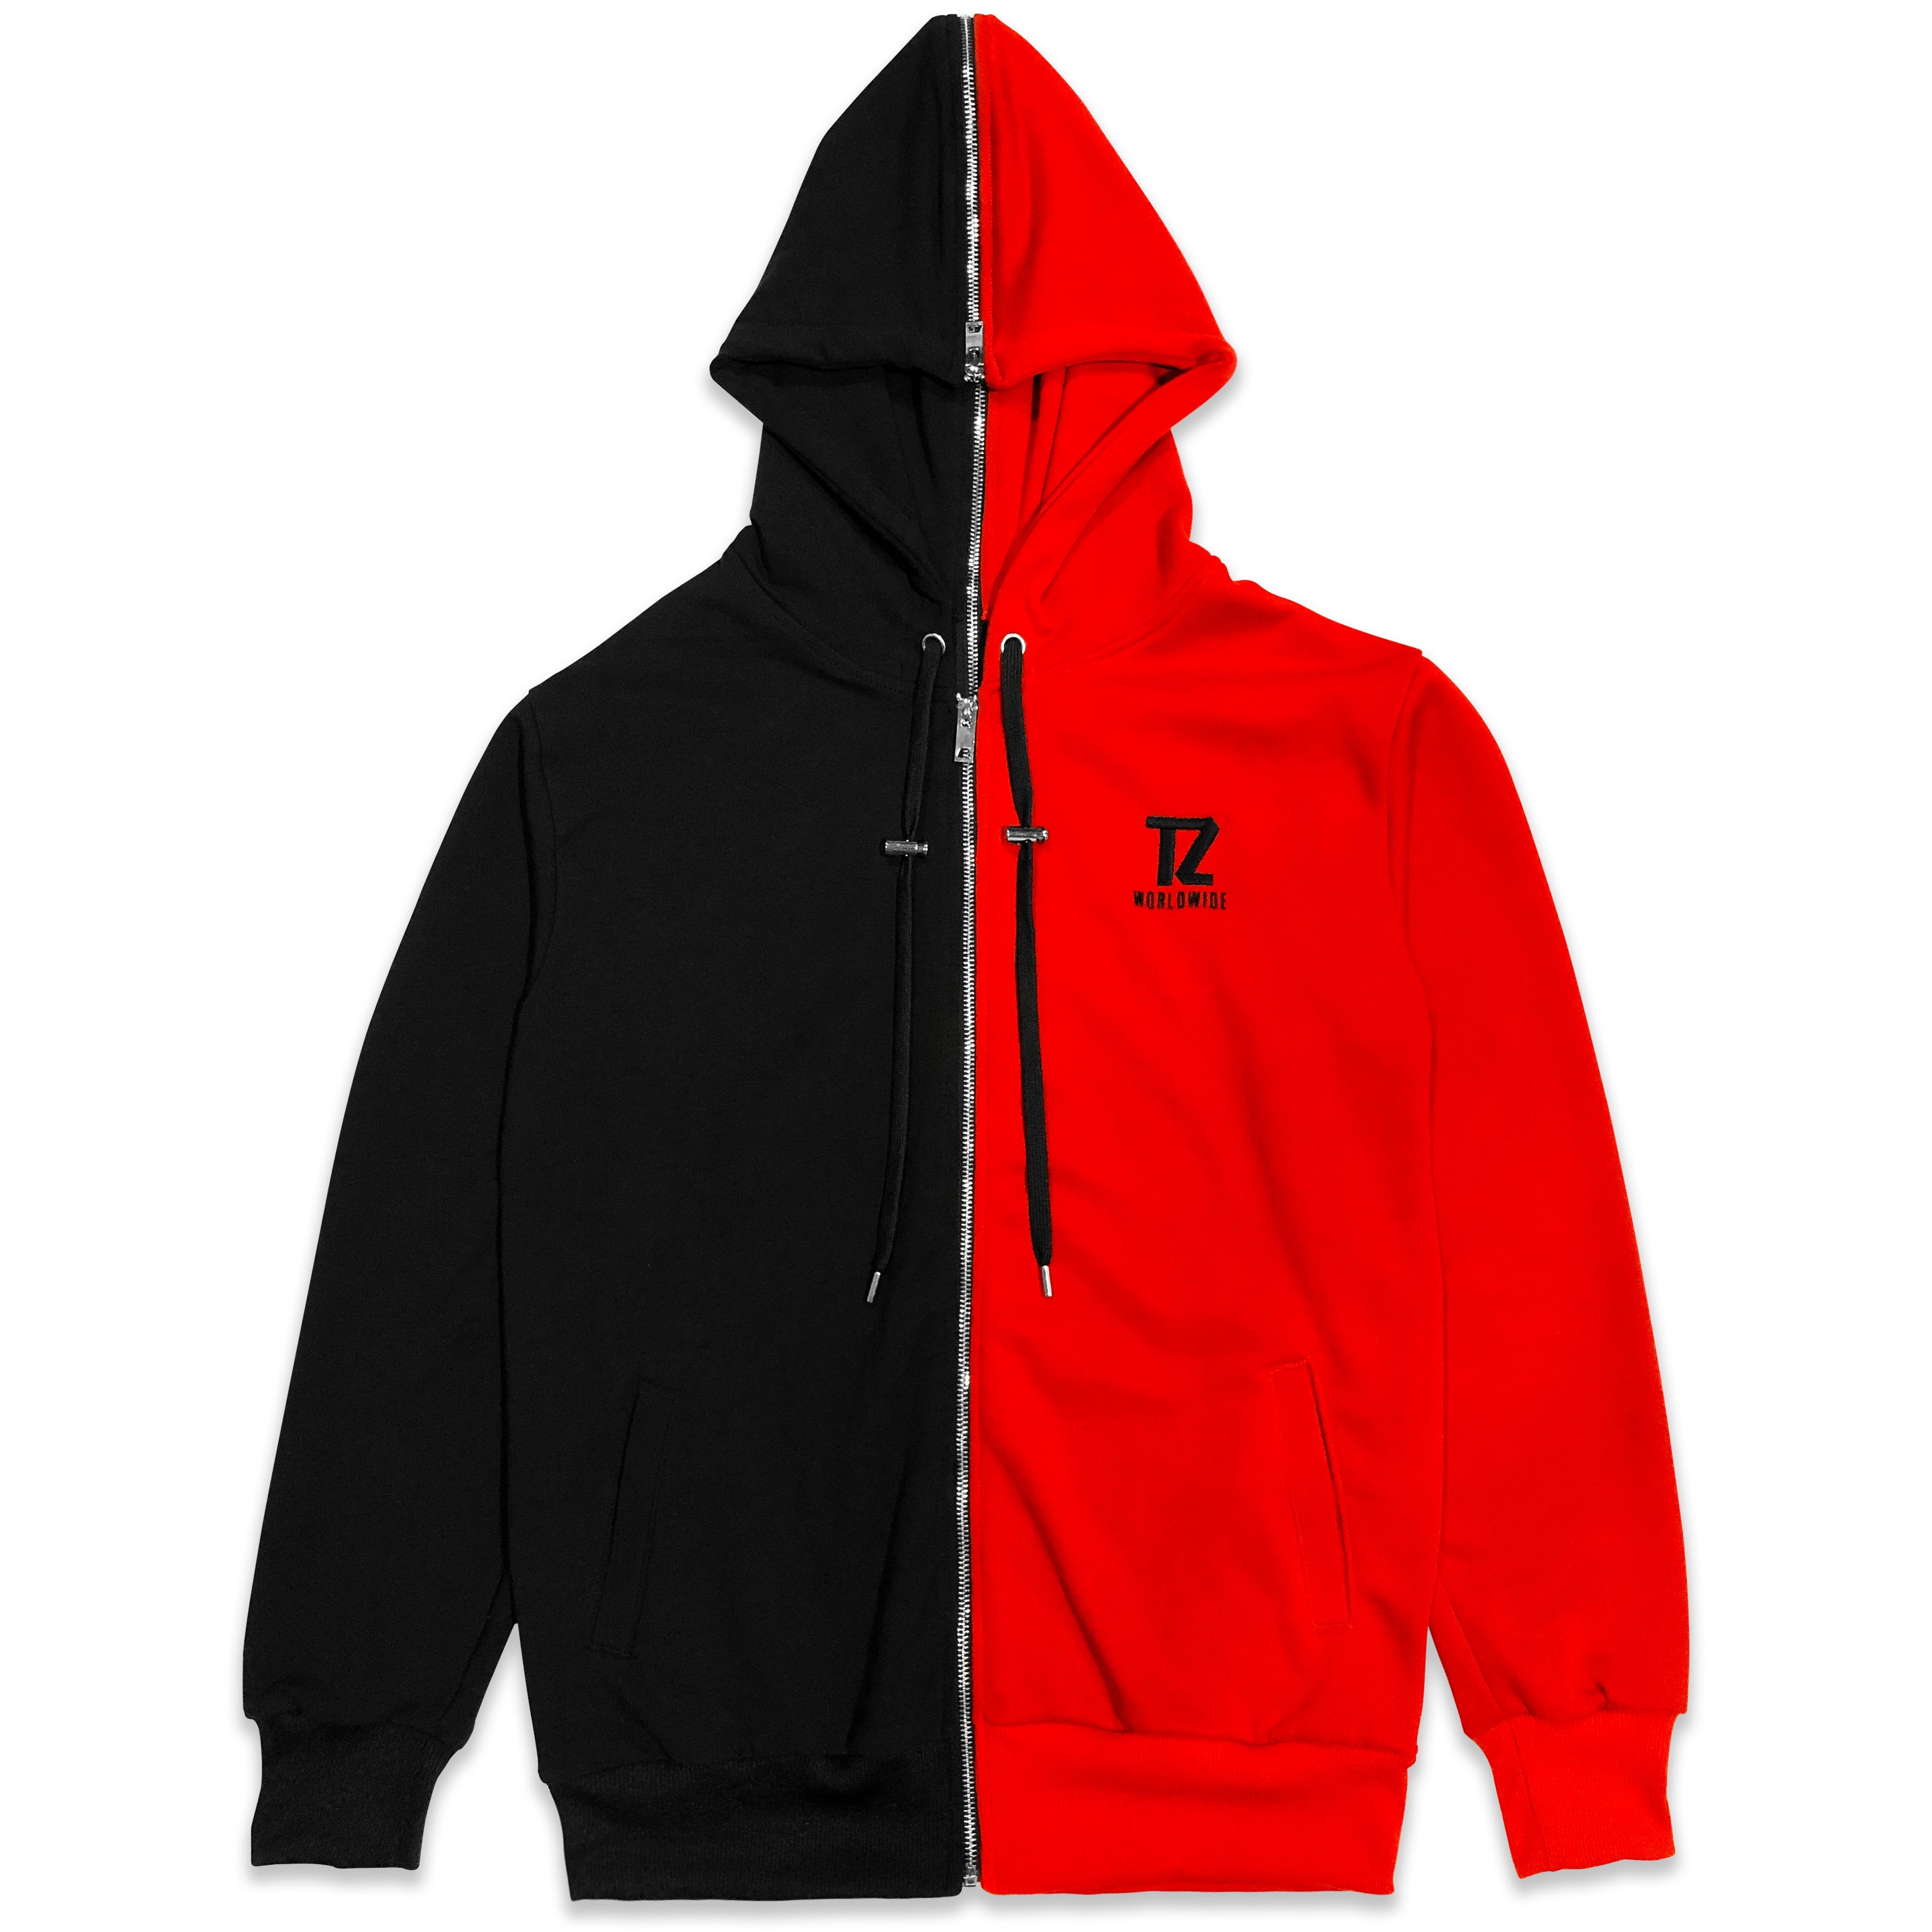 red and black hoodie